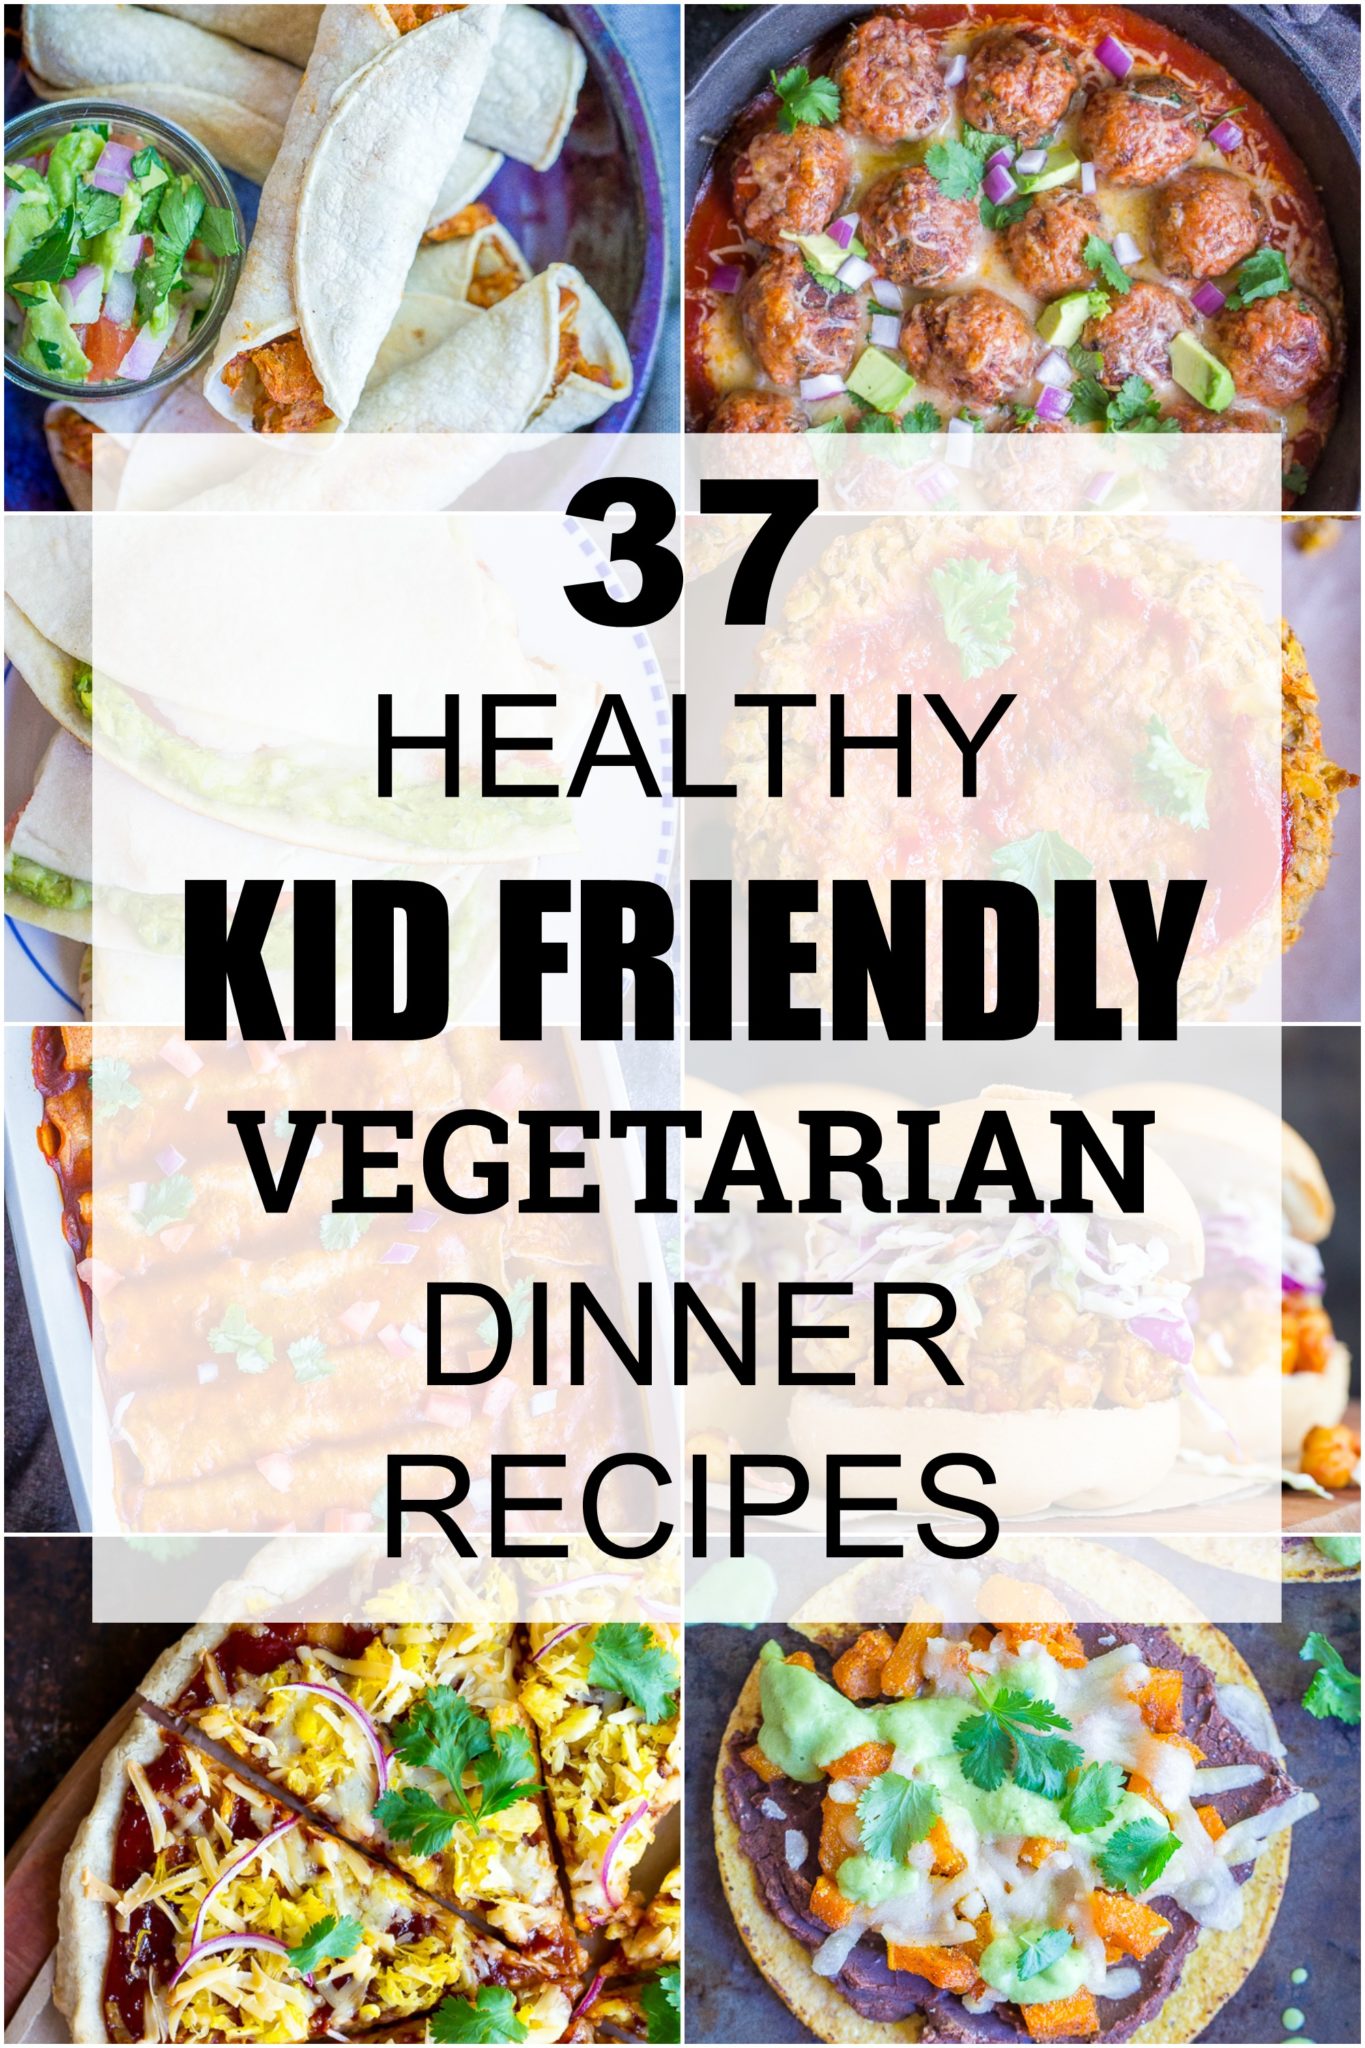 37 Healthy Kid Friendly Vegetarian Dinner Recipes - She Likes Food